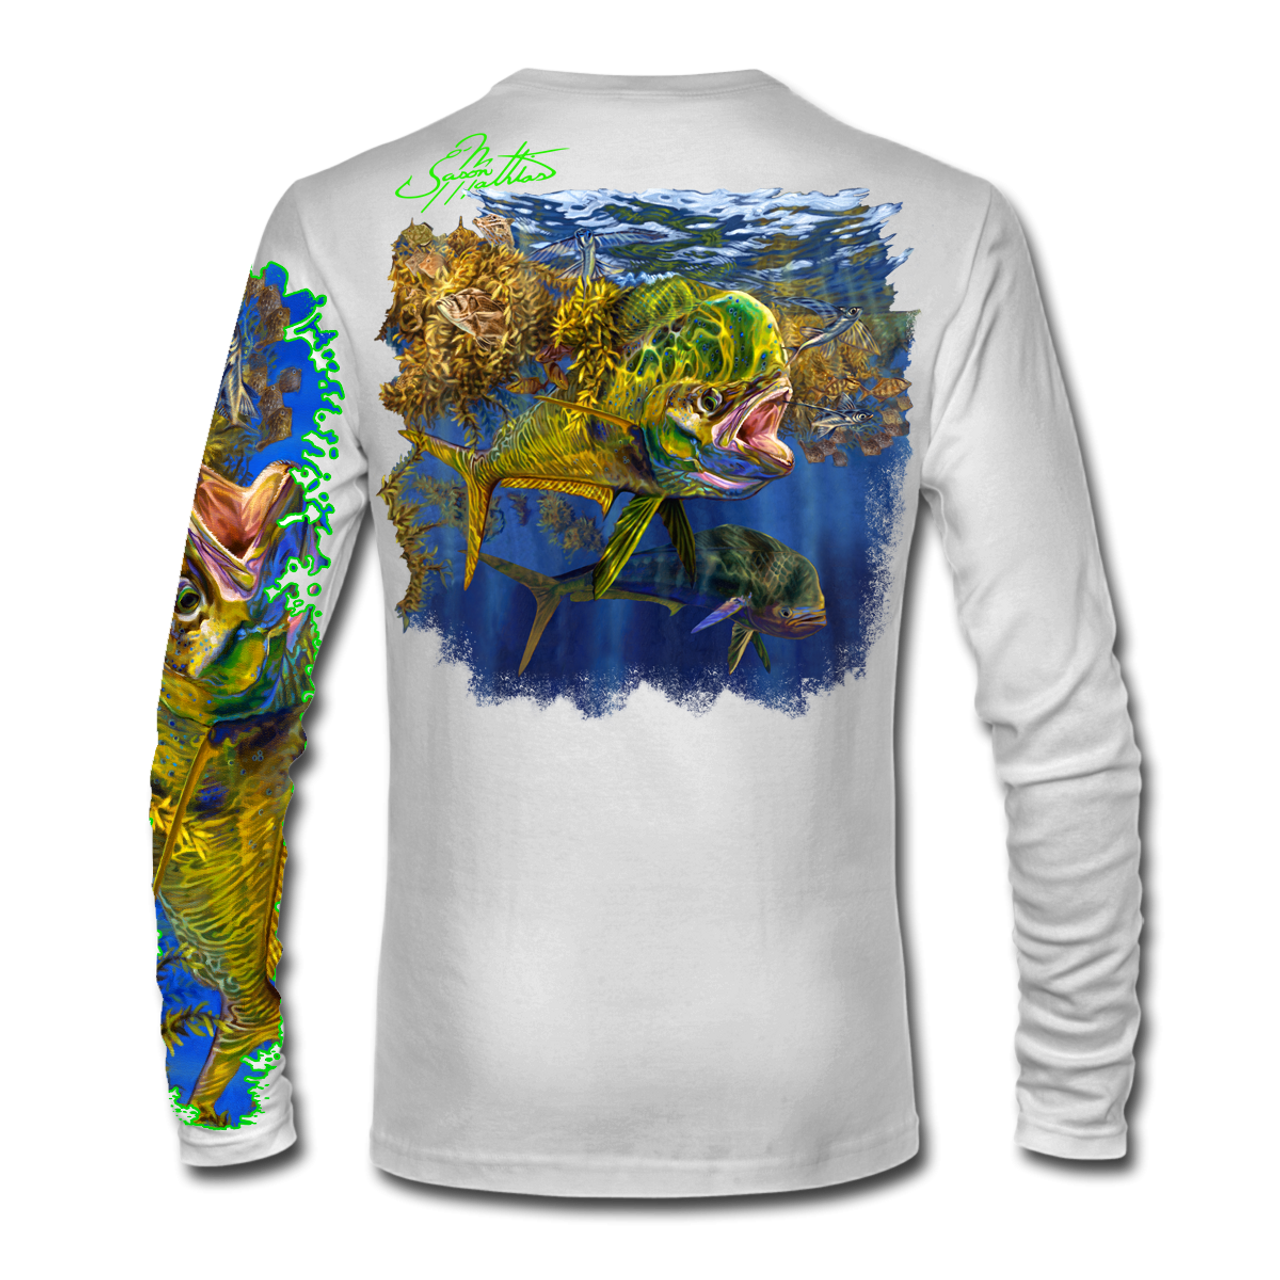 Youth LS High Performance tee shirt (Lobster Dive) - Jason Mathias